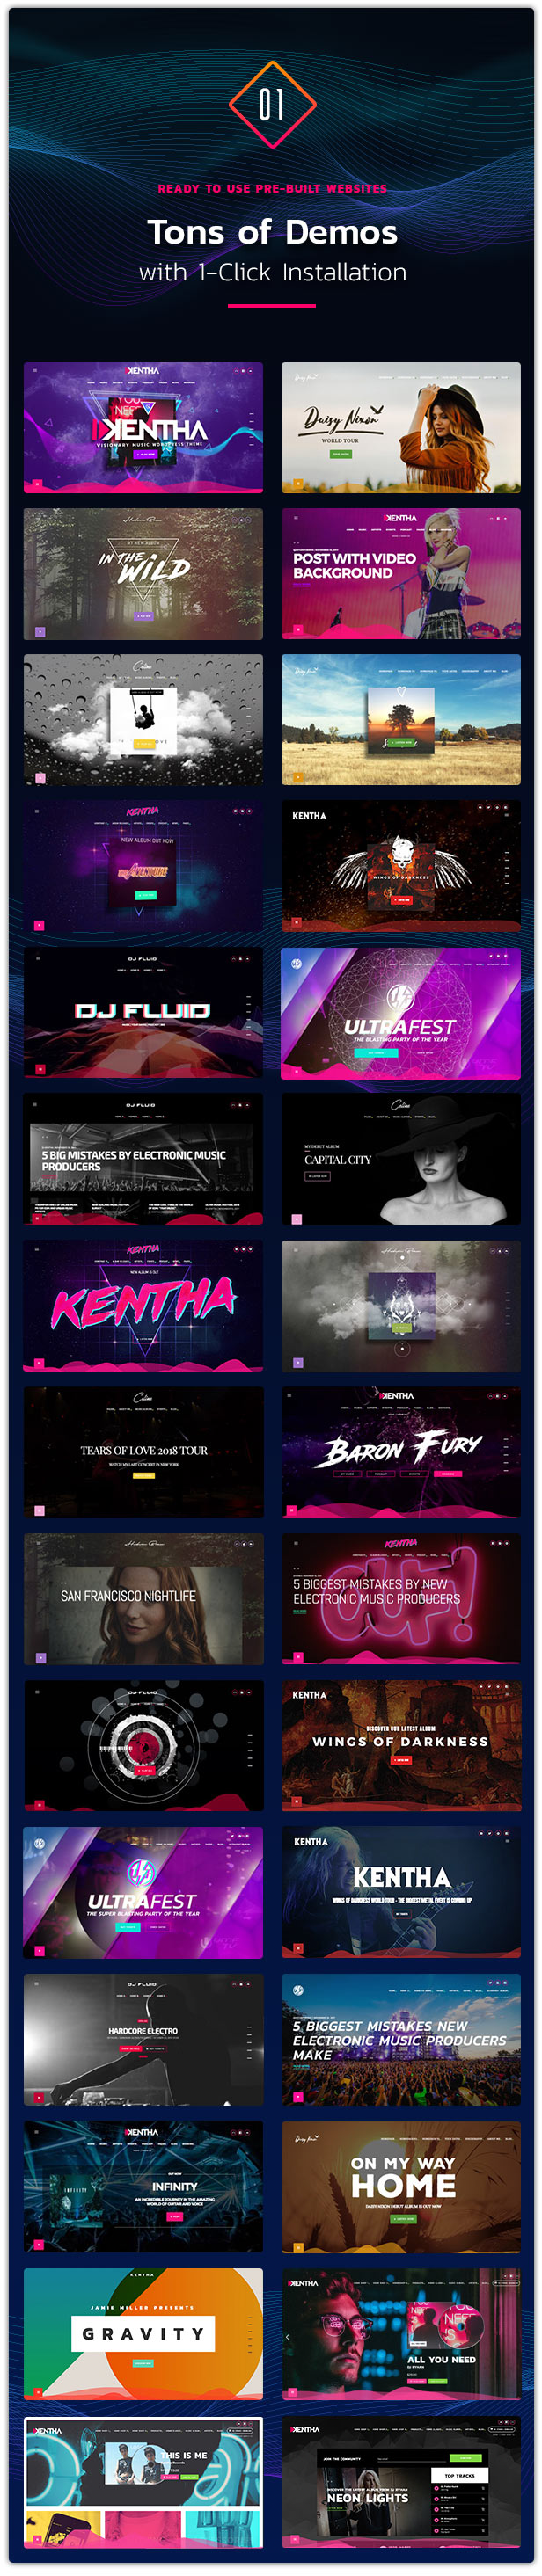 kentha infographic 02 - Kentha - Non-Stop Music WordPress Theme with Ajax